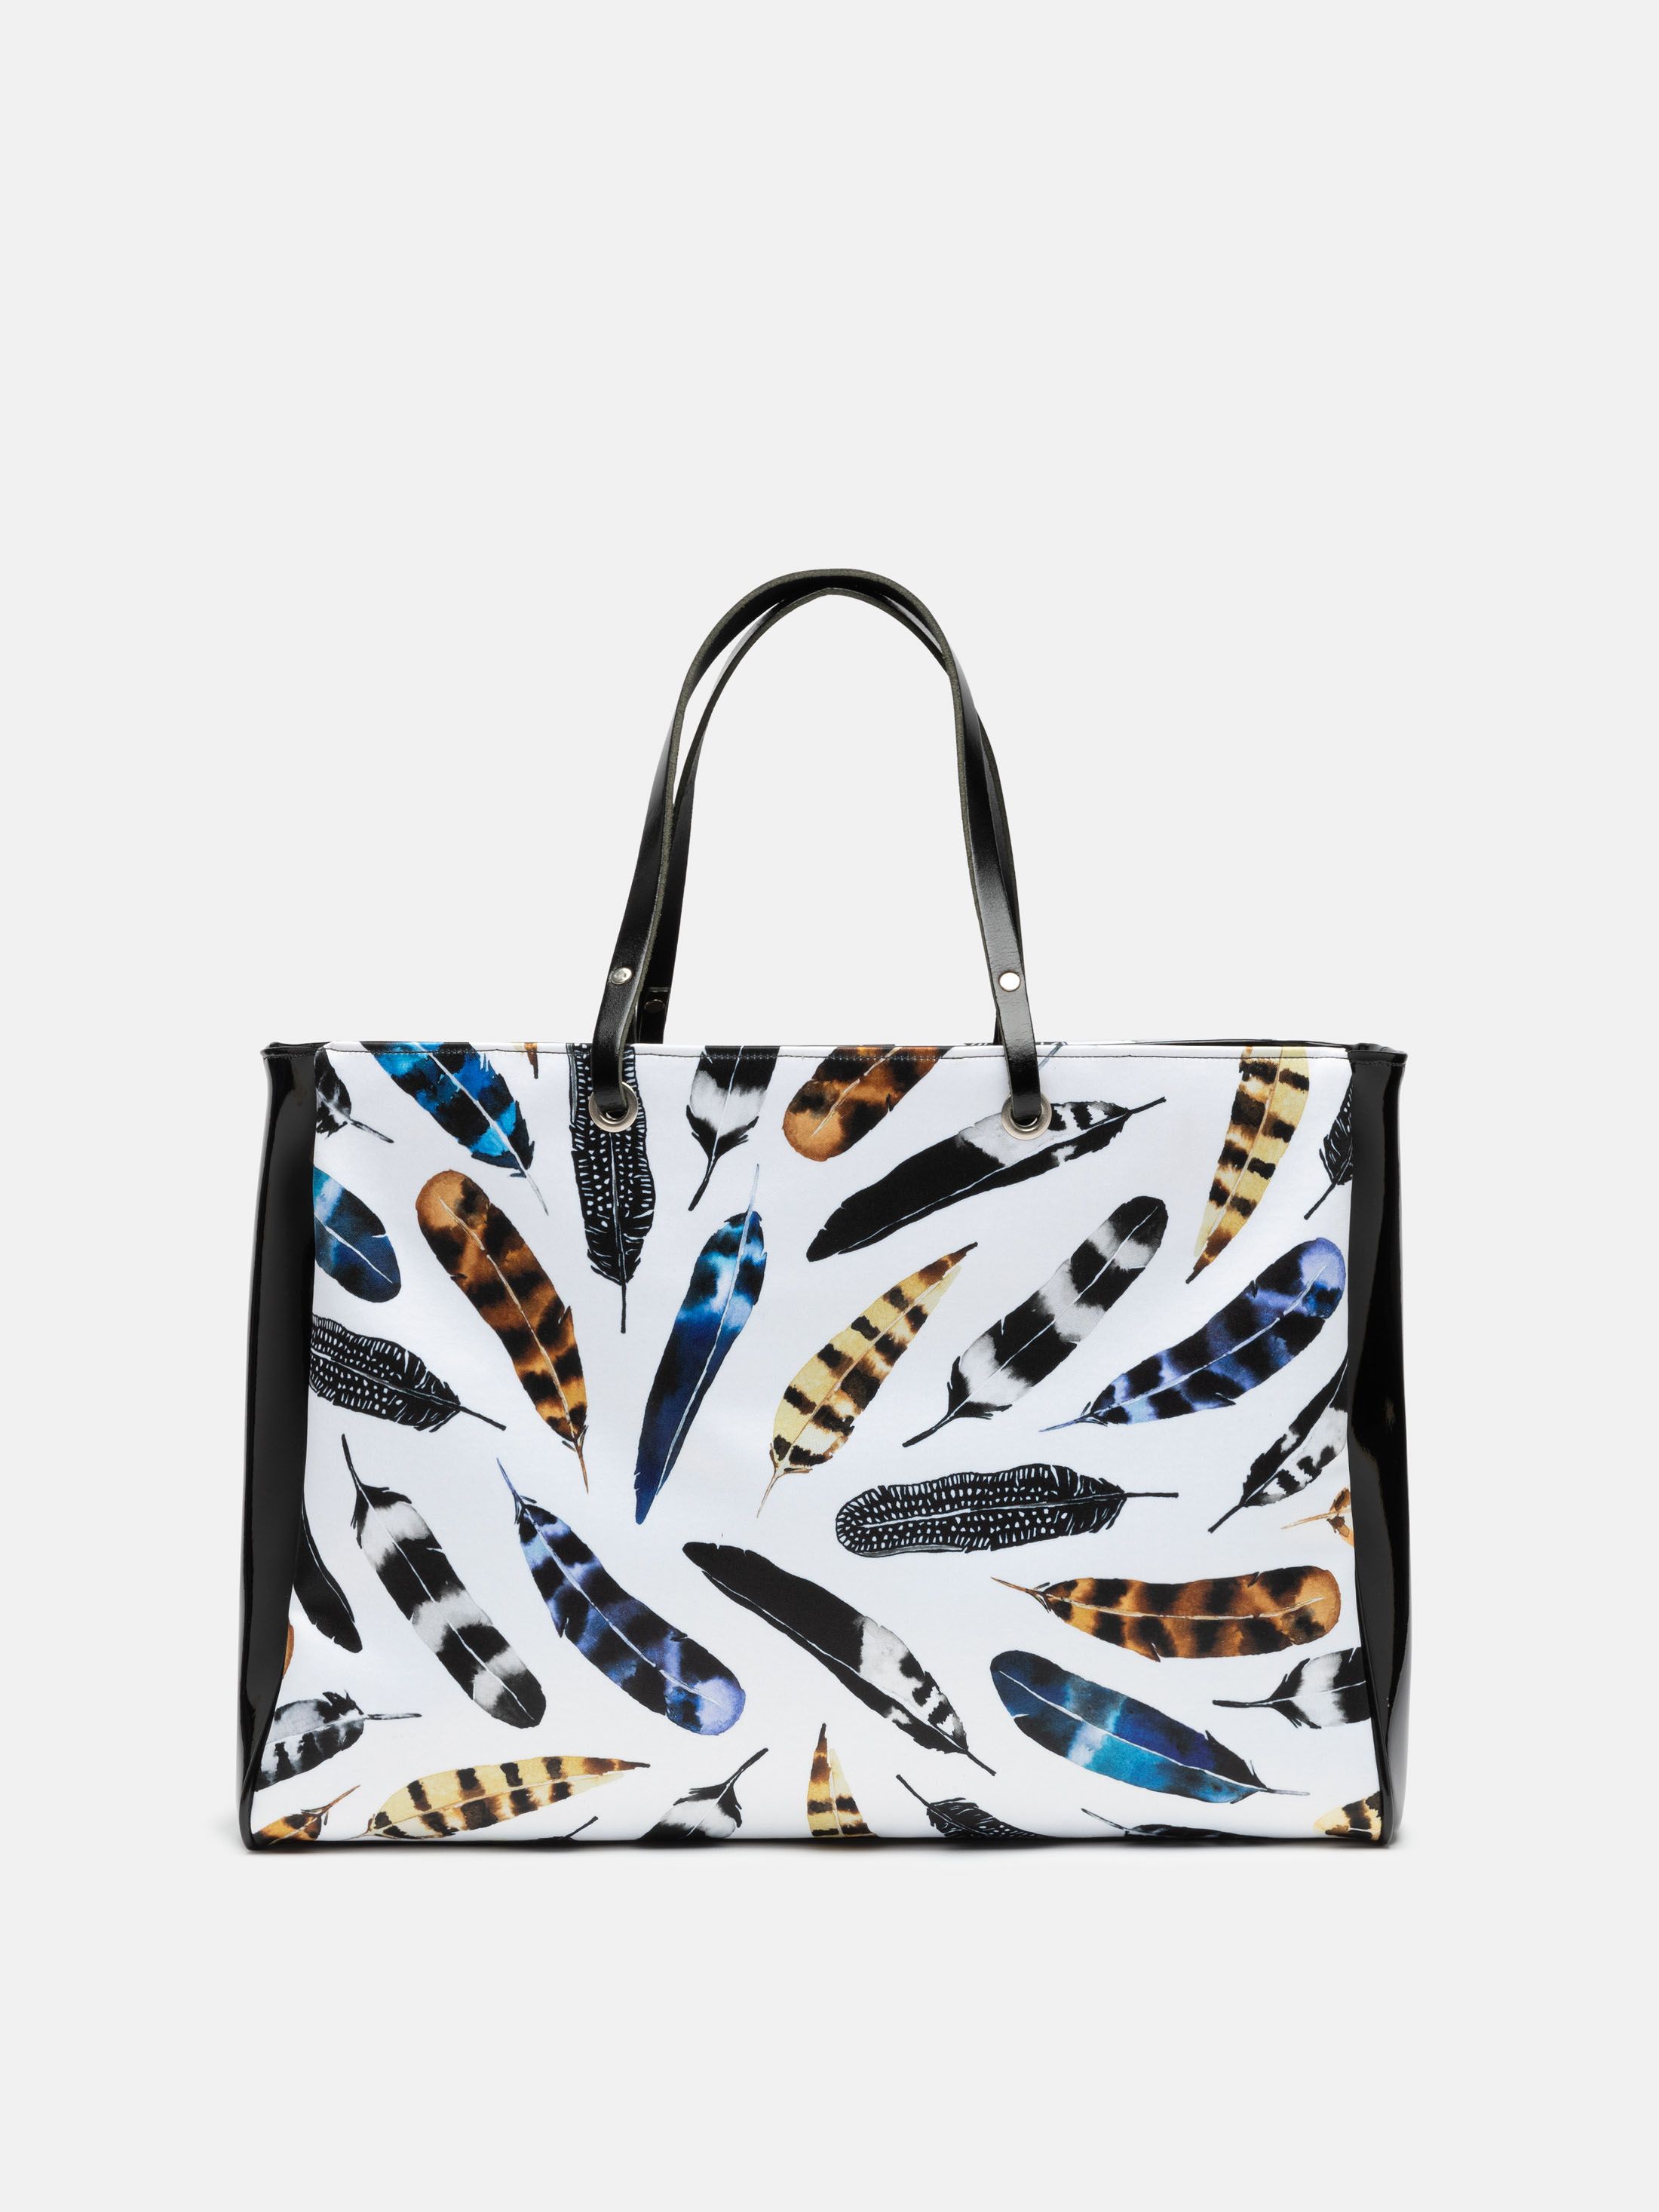 Custom Louis Vuitton Bag in Glass Frame